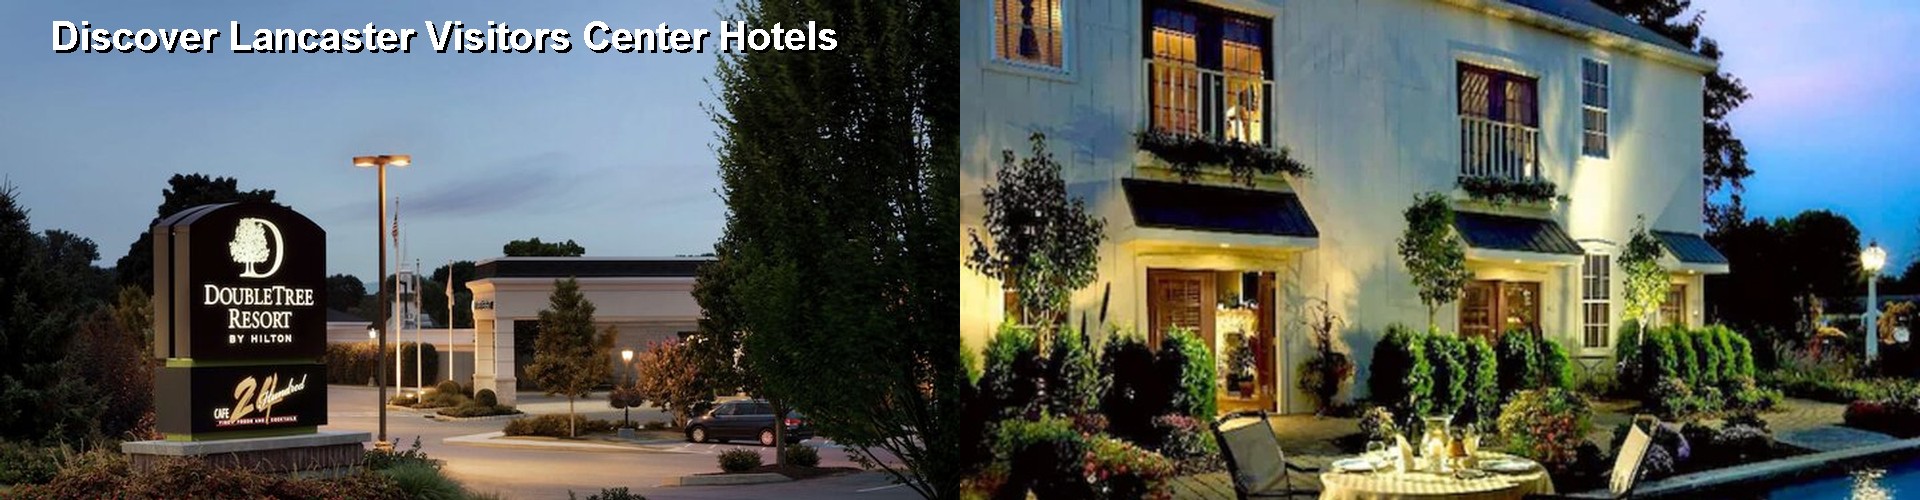 5 Best Hotels near Discover Lancaster Visitors Center